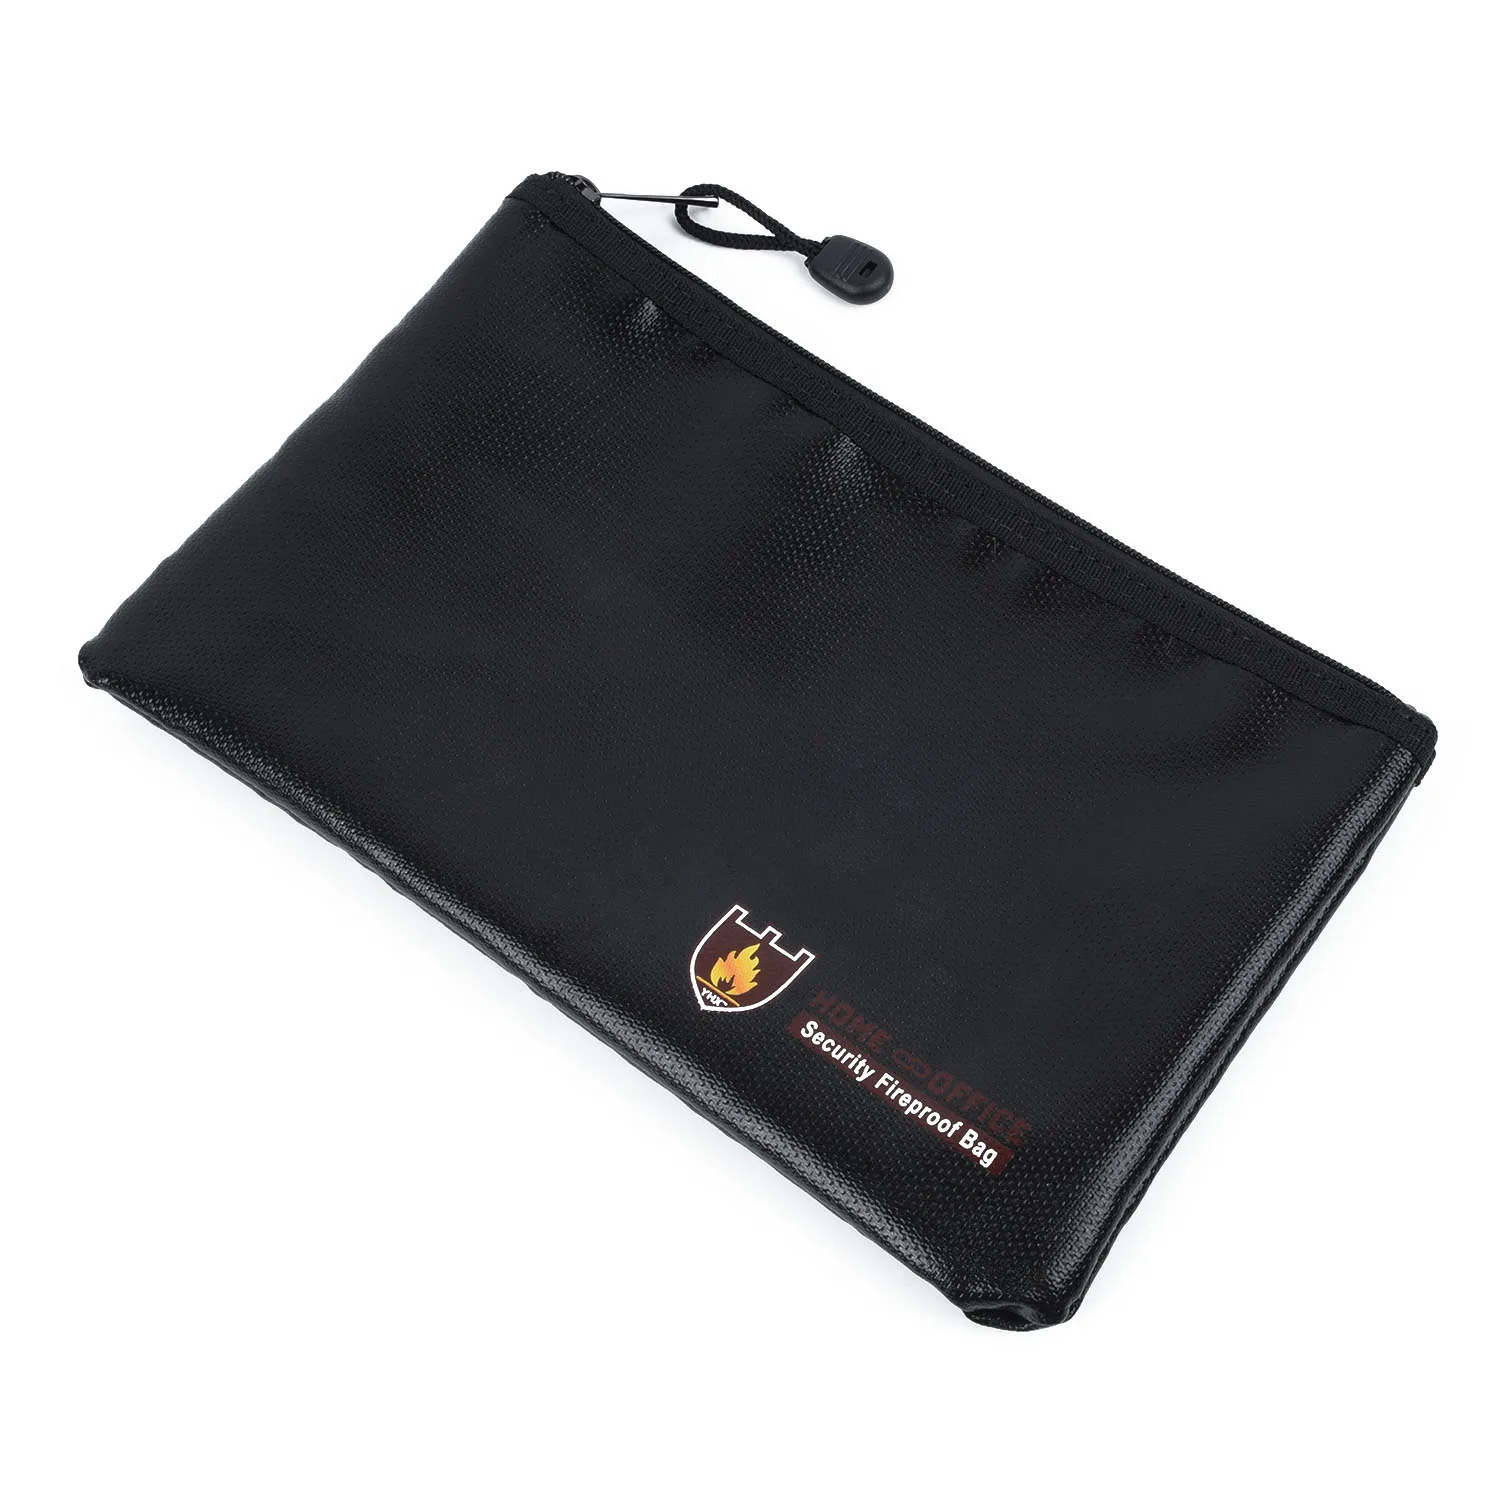 Water Resistant Money Bag Envelope Fireproof Safe Document Bag File Pouch Black 